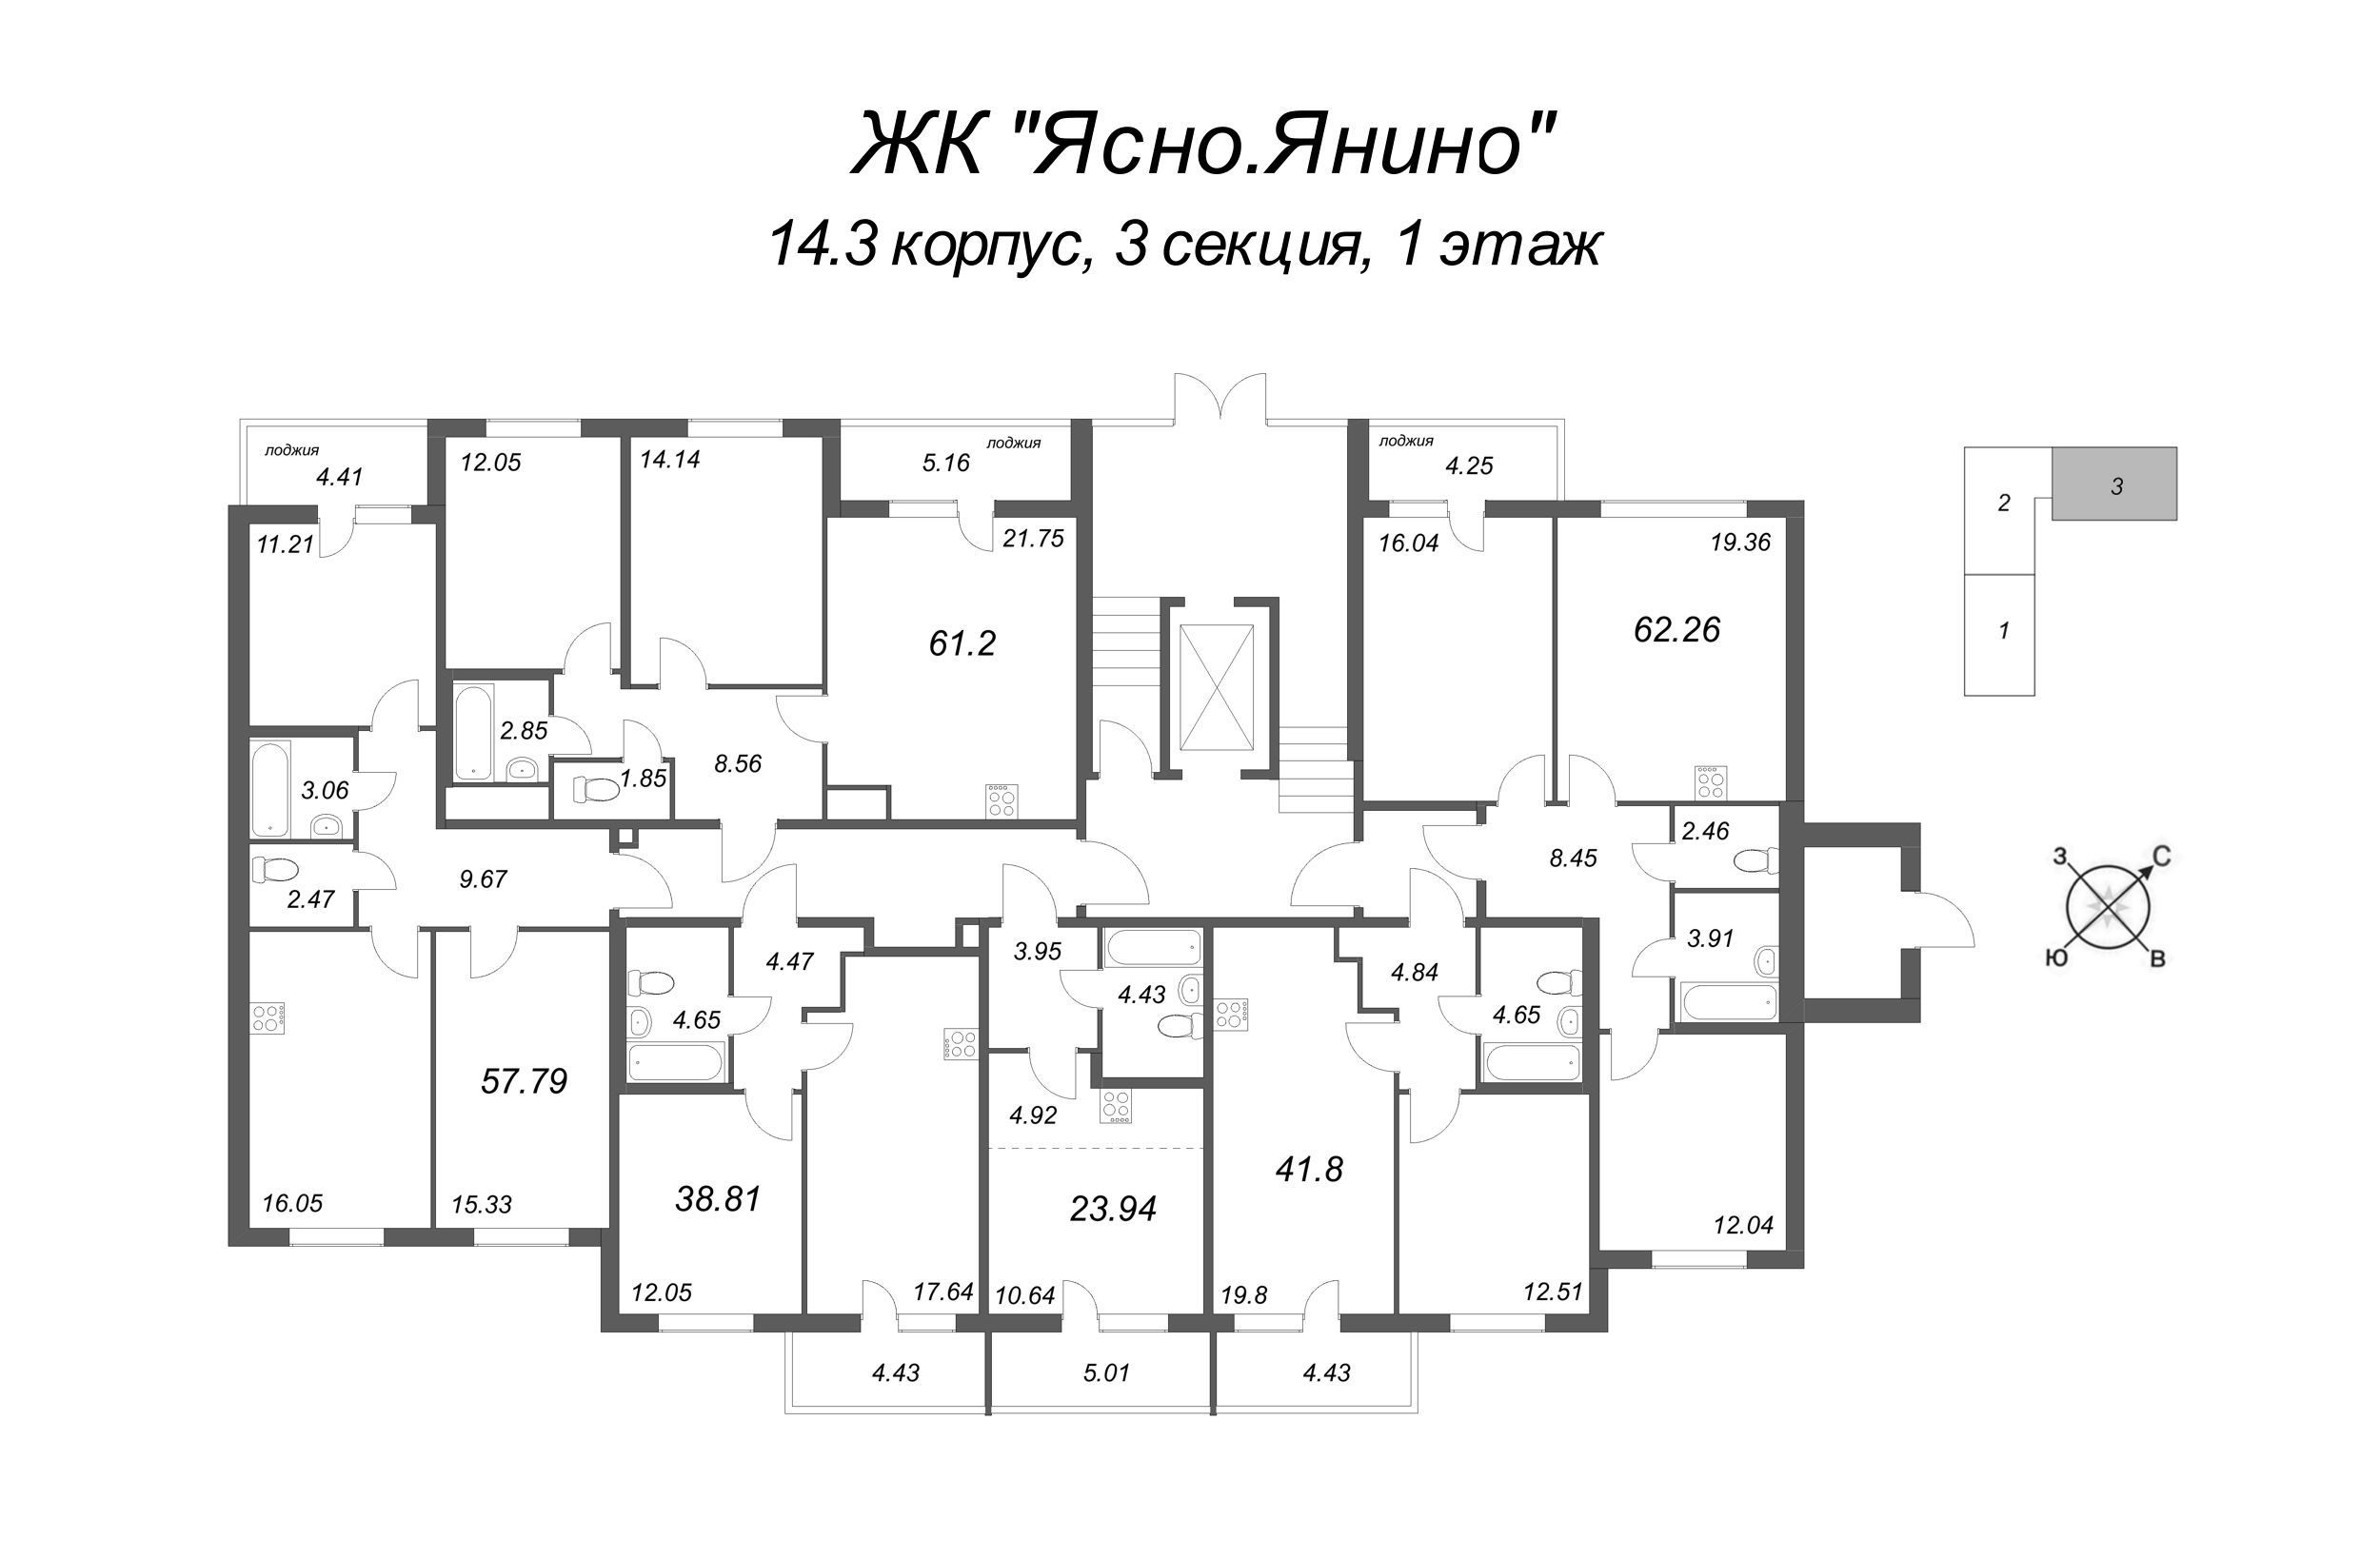 2-комнатная (Евро) квартира, 38.81 м² в ЖК "Ясно.Янино" - планировка этажа